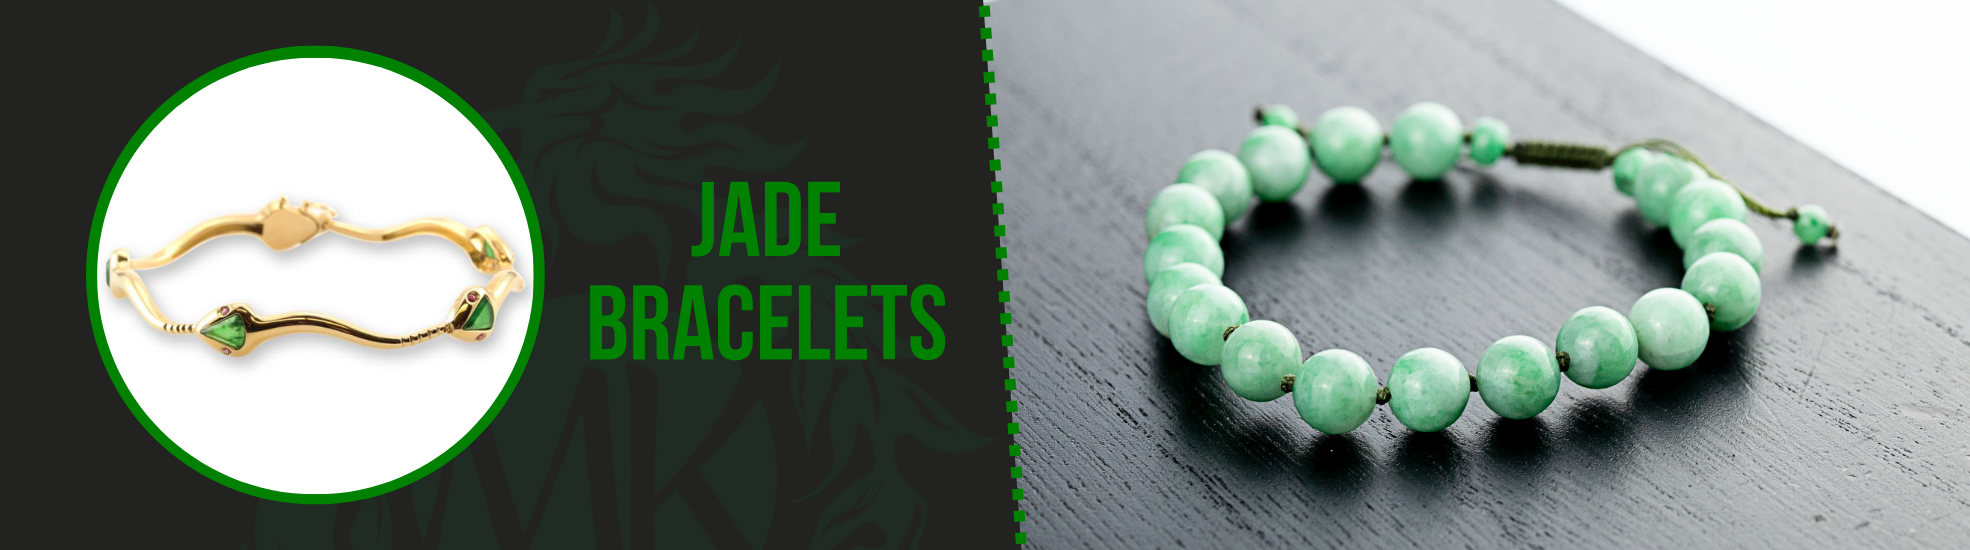 Certified Green Jade 10 mm Round Bead Bracelet With Certificate